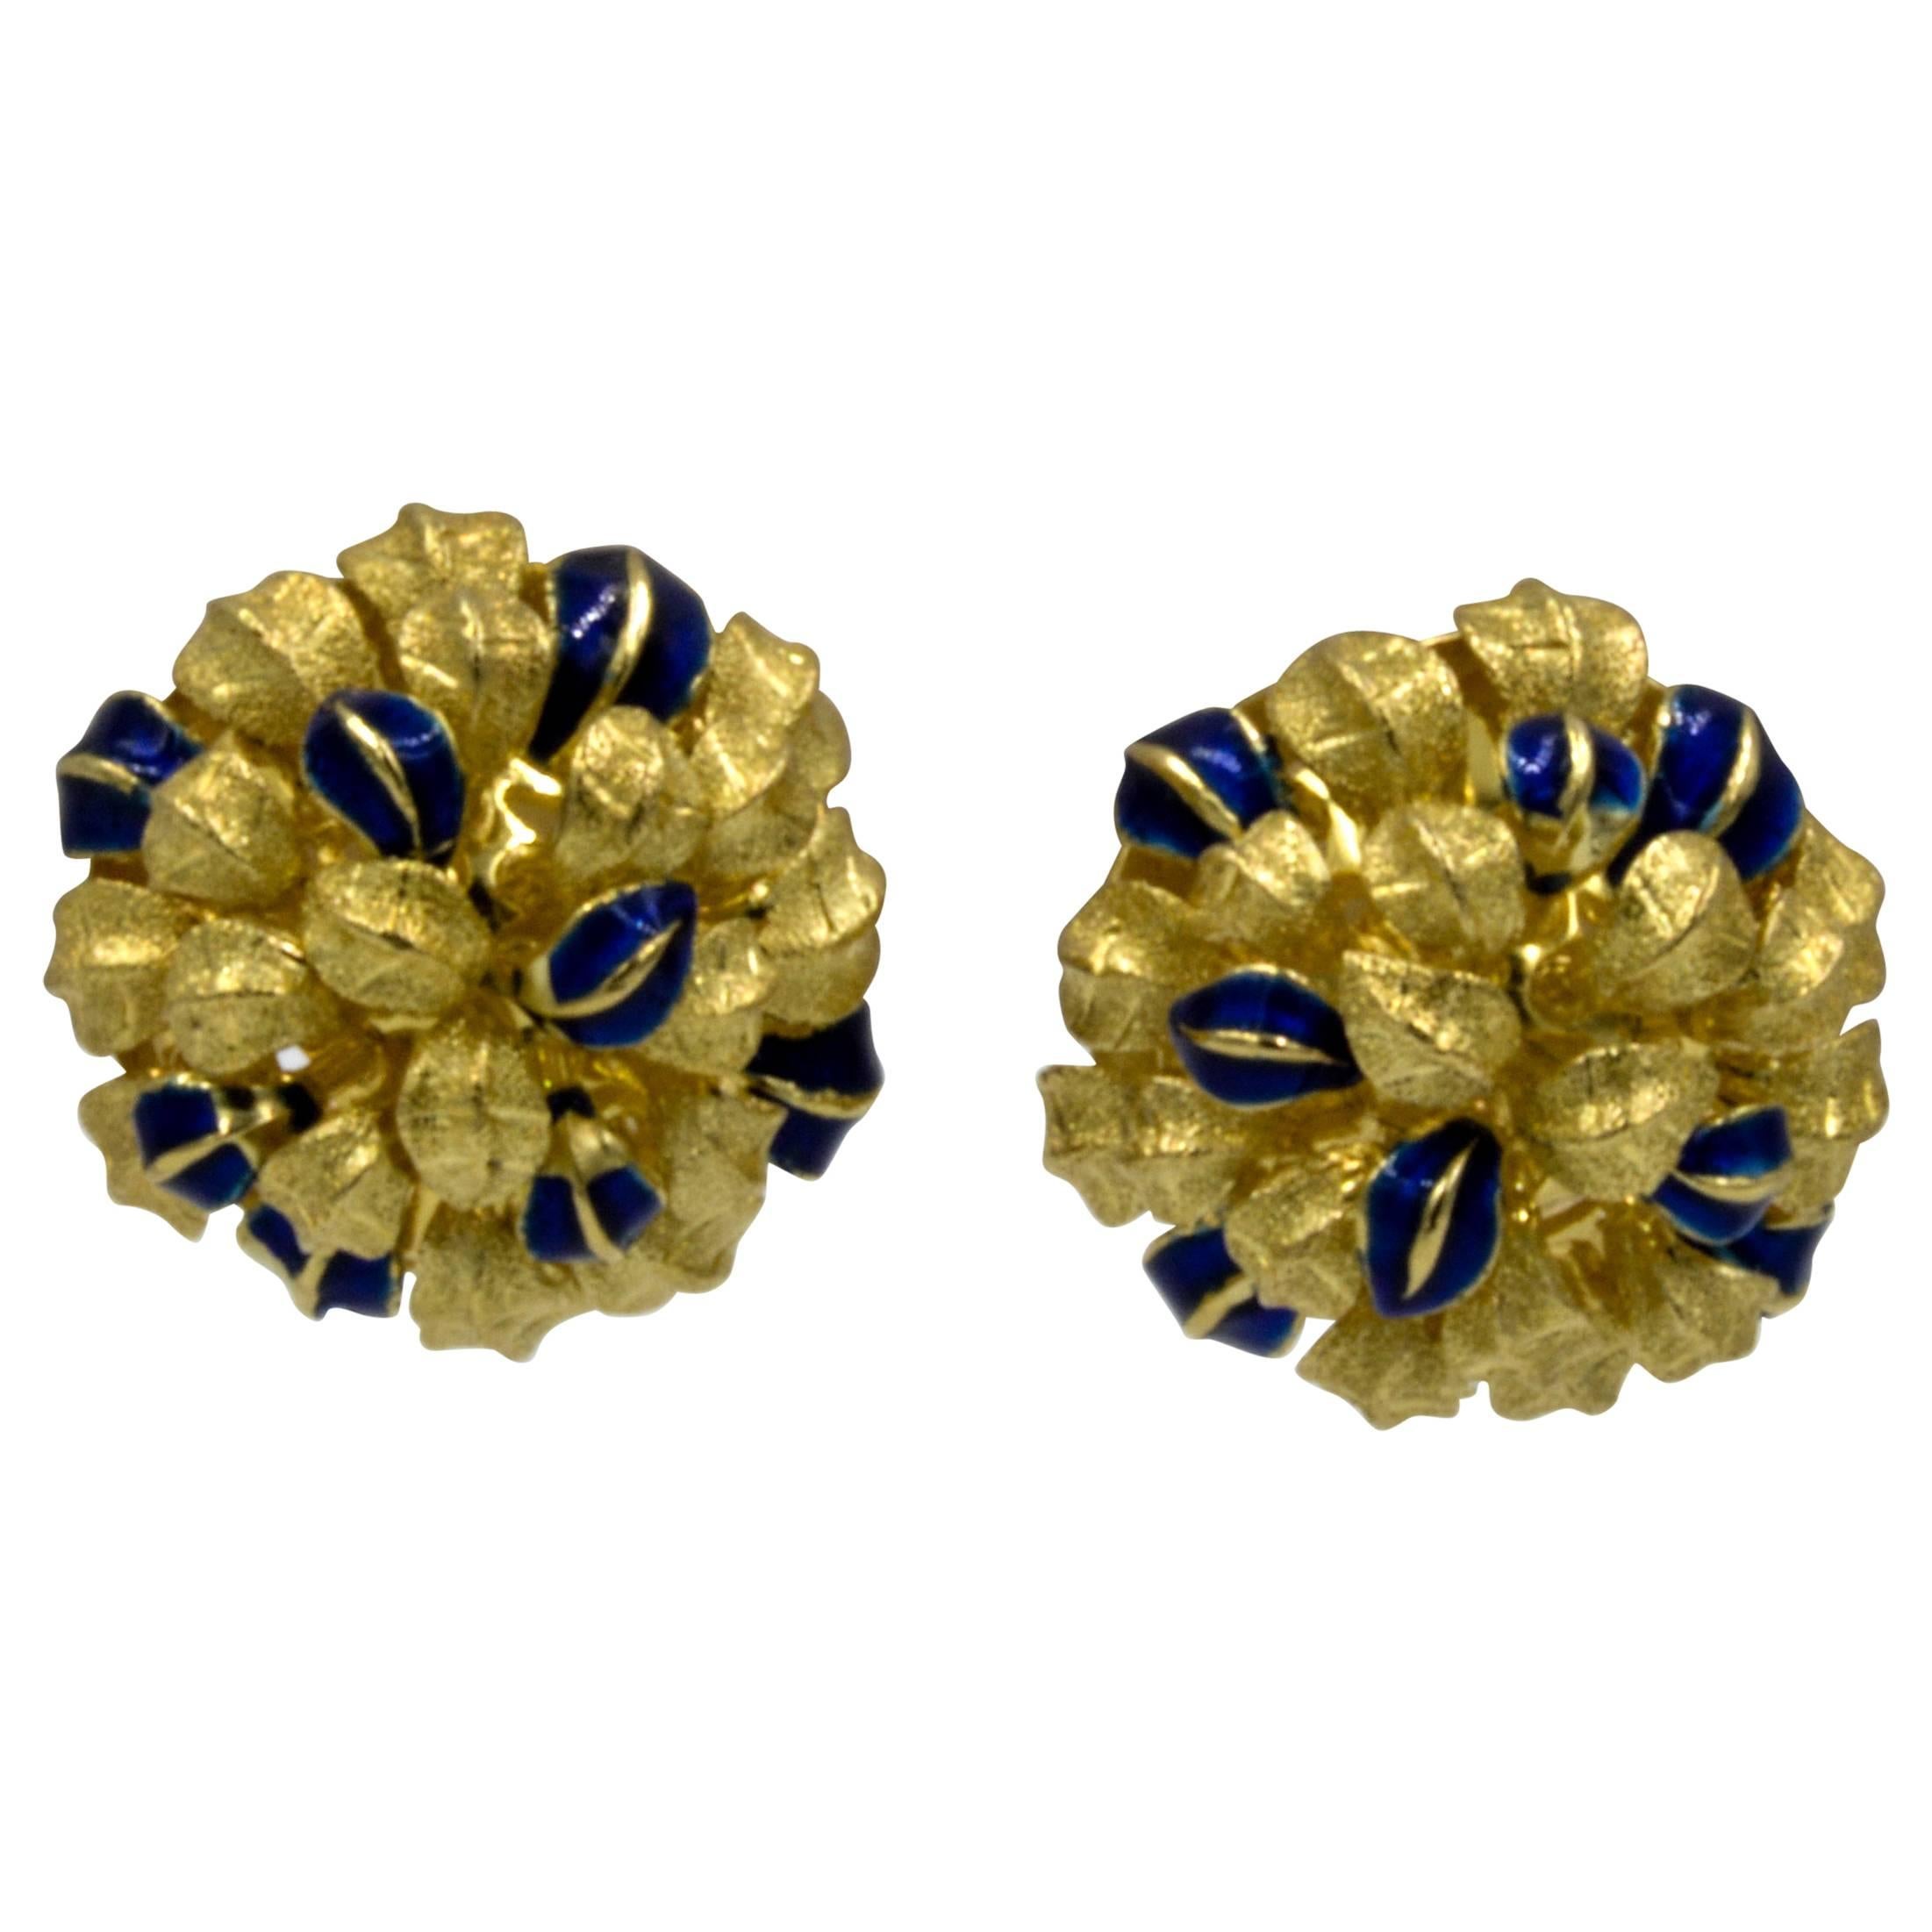 Leaf Design 18 Karat Yellow Gold and Enamel Earrings